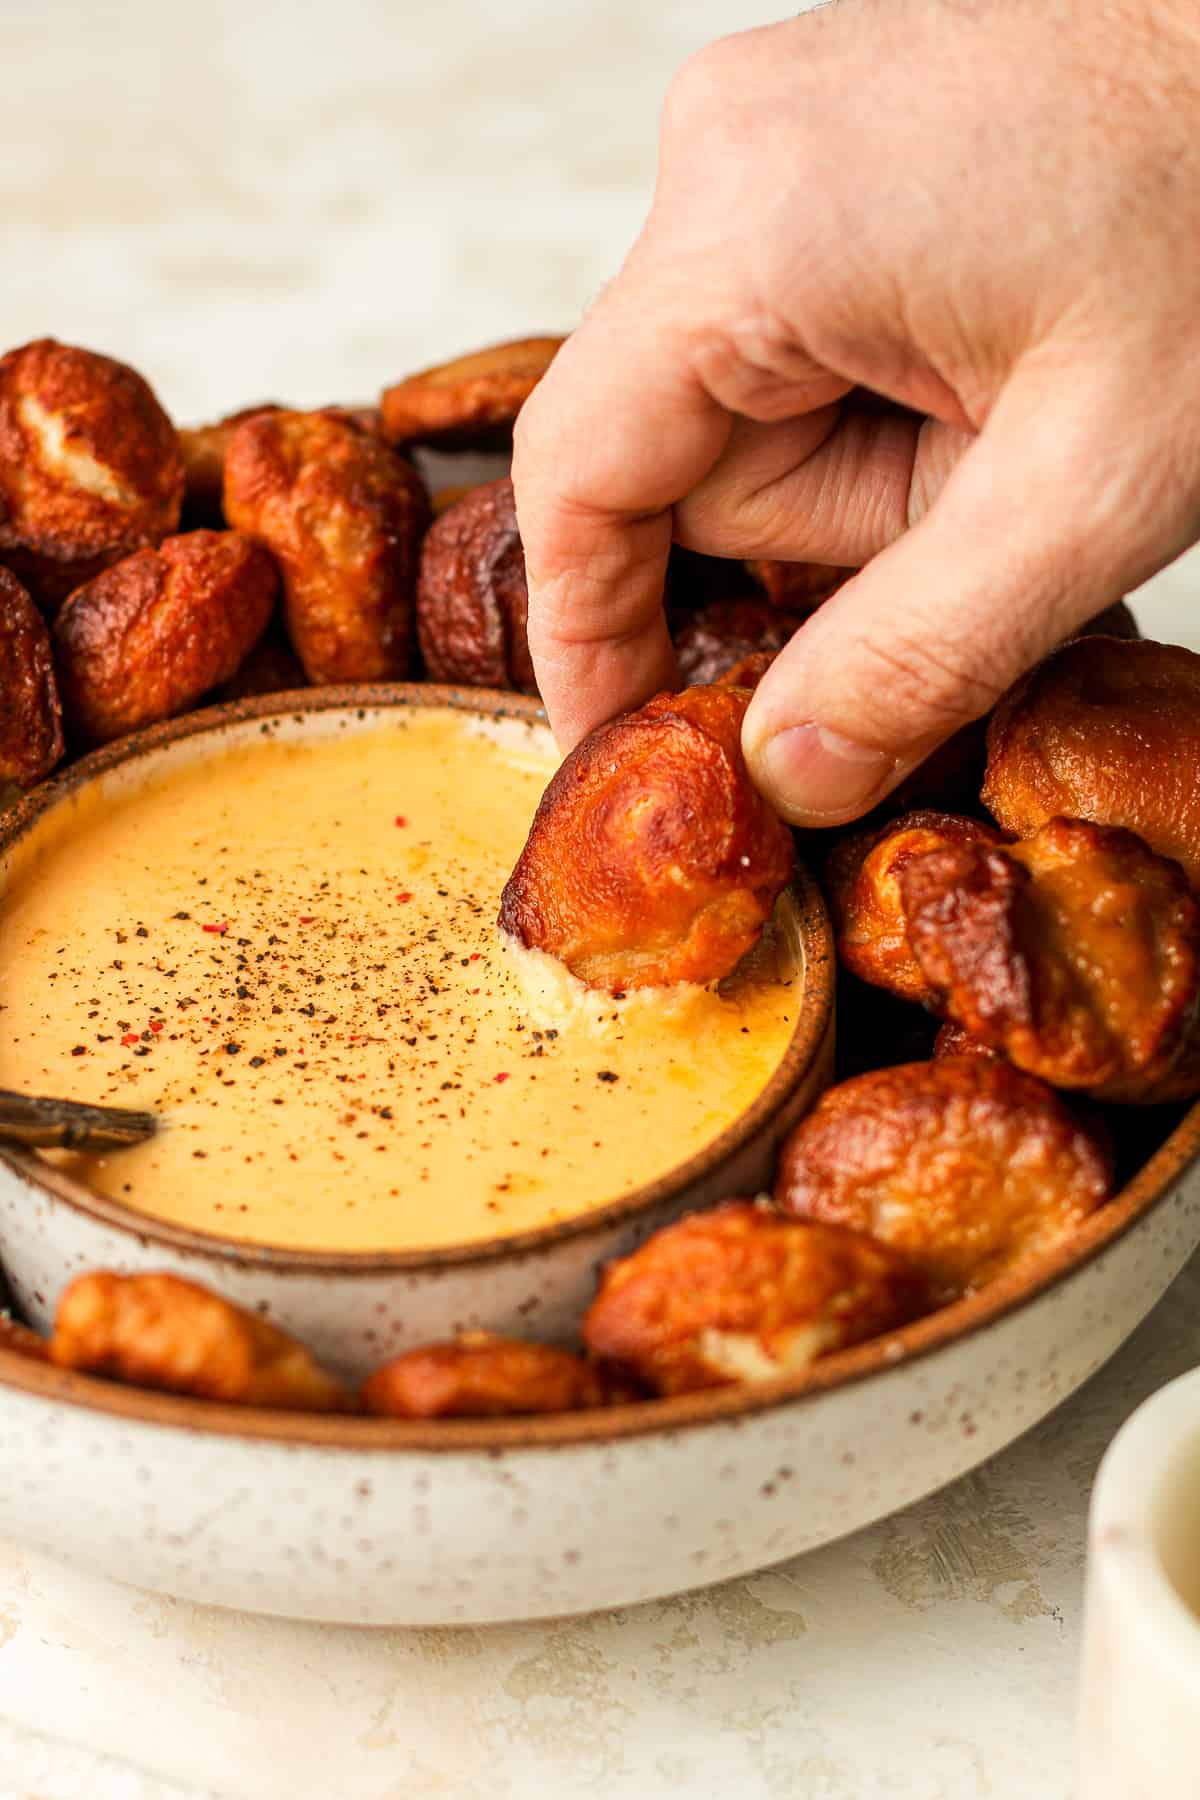 A hand dipping a pretzel bite into a bowl of homemade cheese dip.